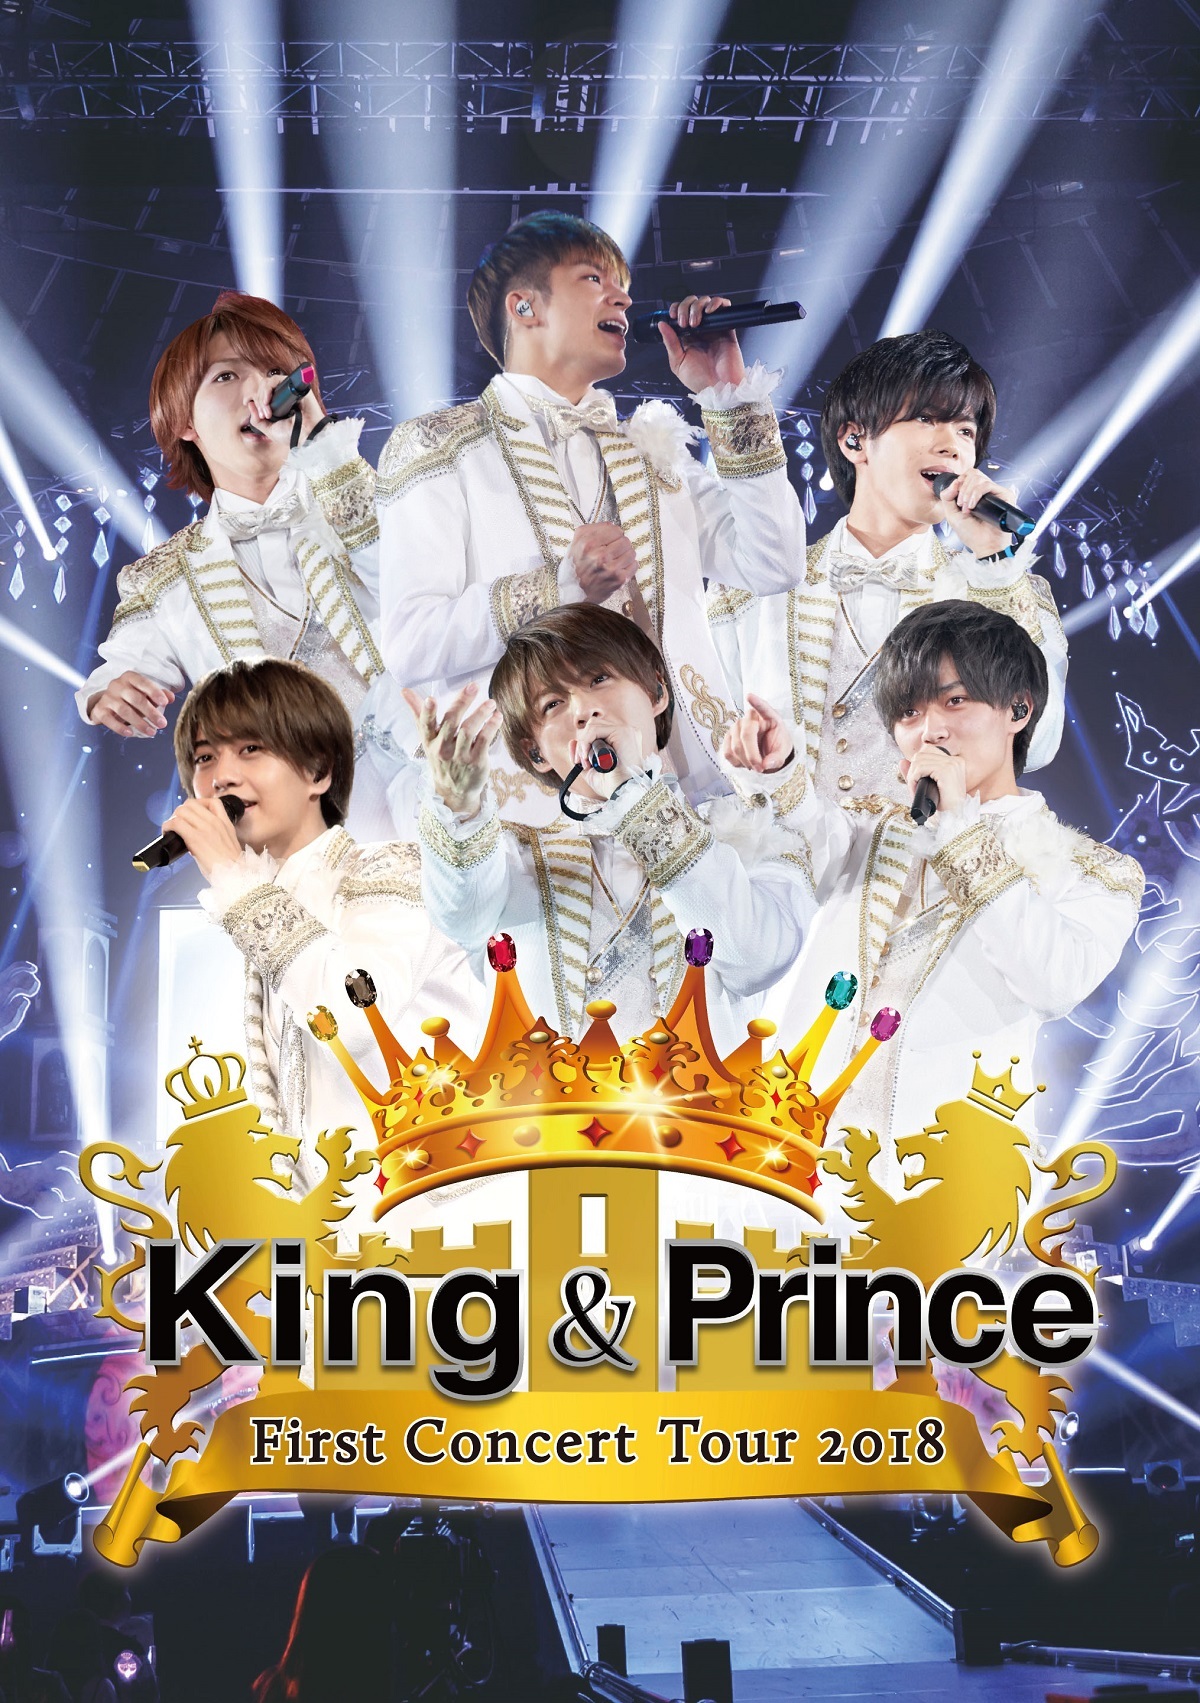 King & Prince 初のライブ映像作品のダイジェスト映像公開 | SPICE - エンタメ特化型情報メディア スパイス